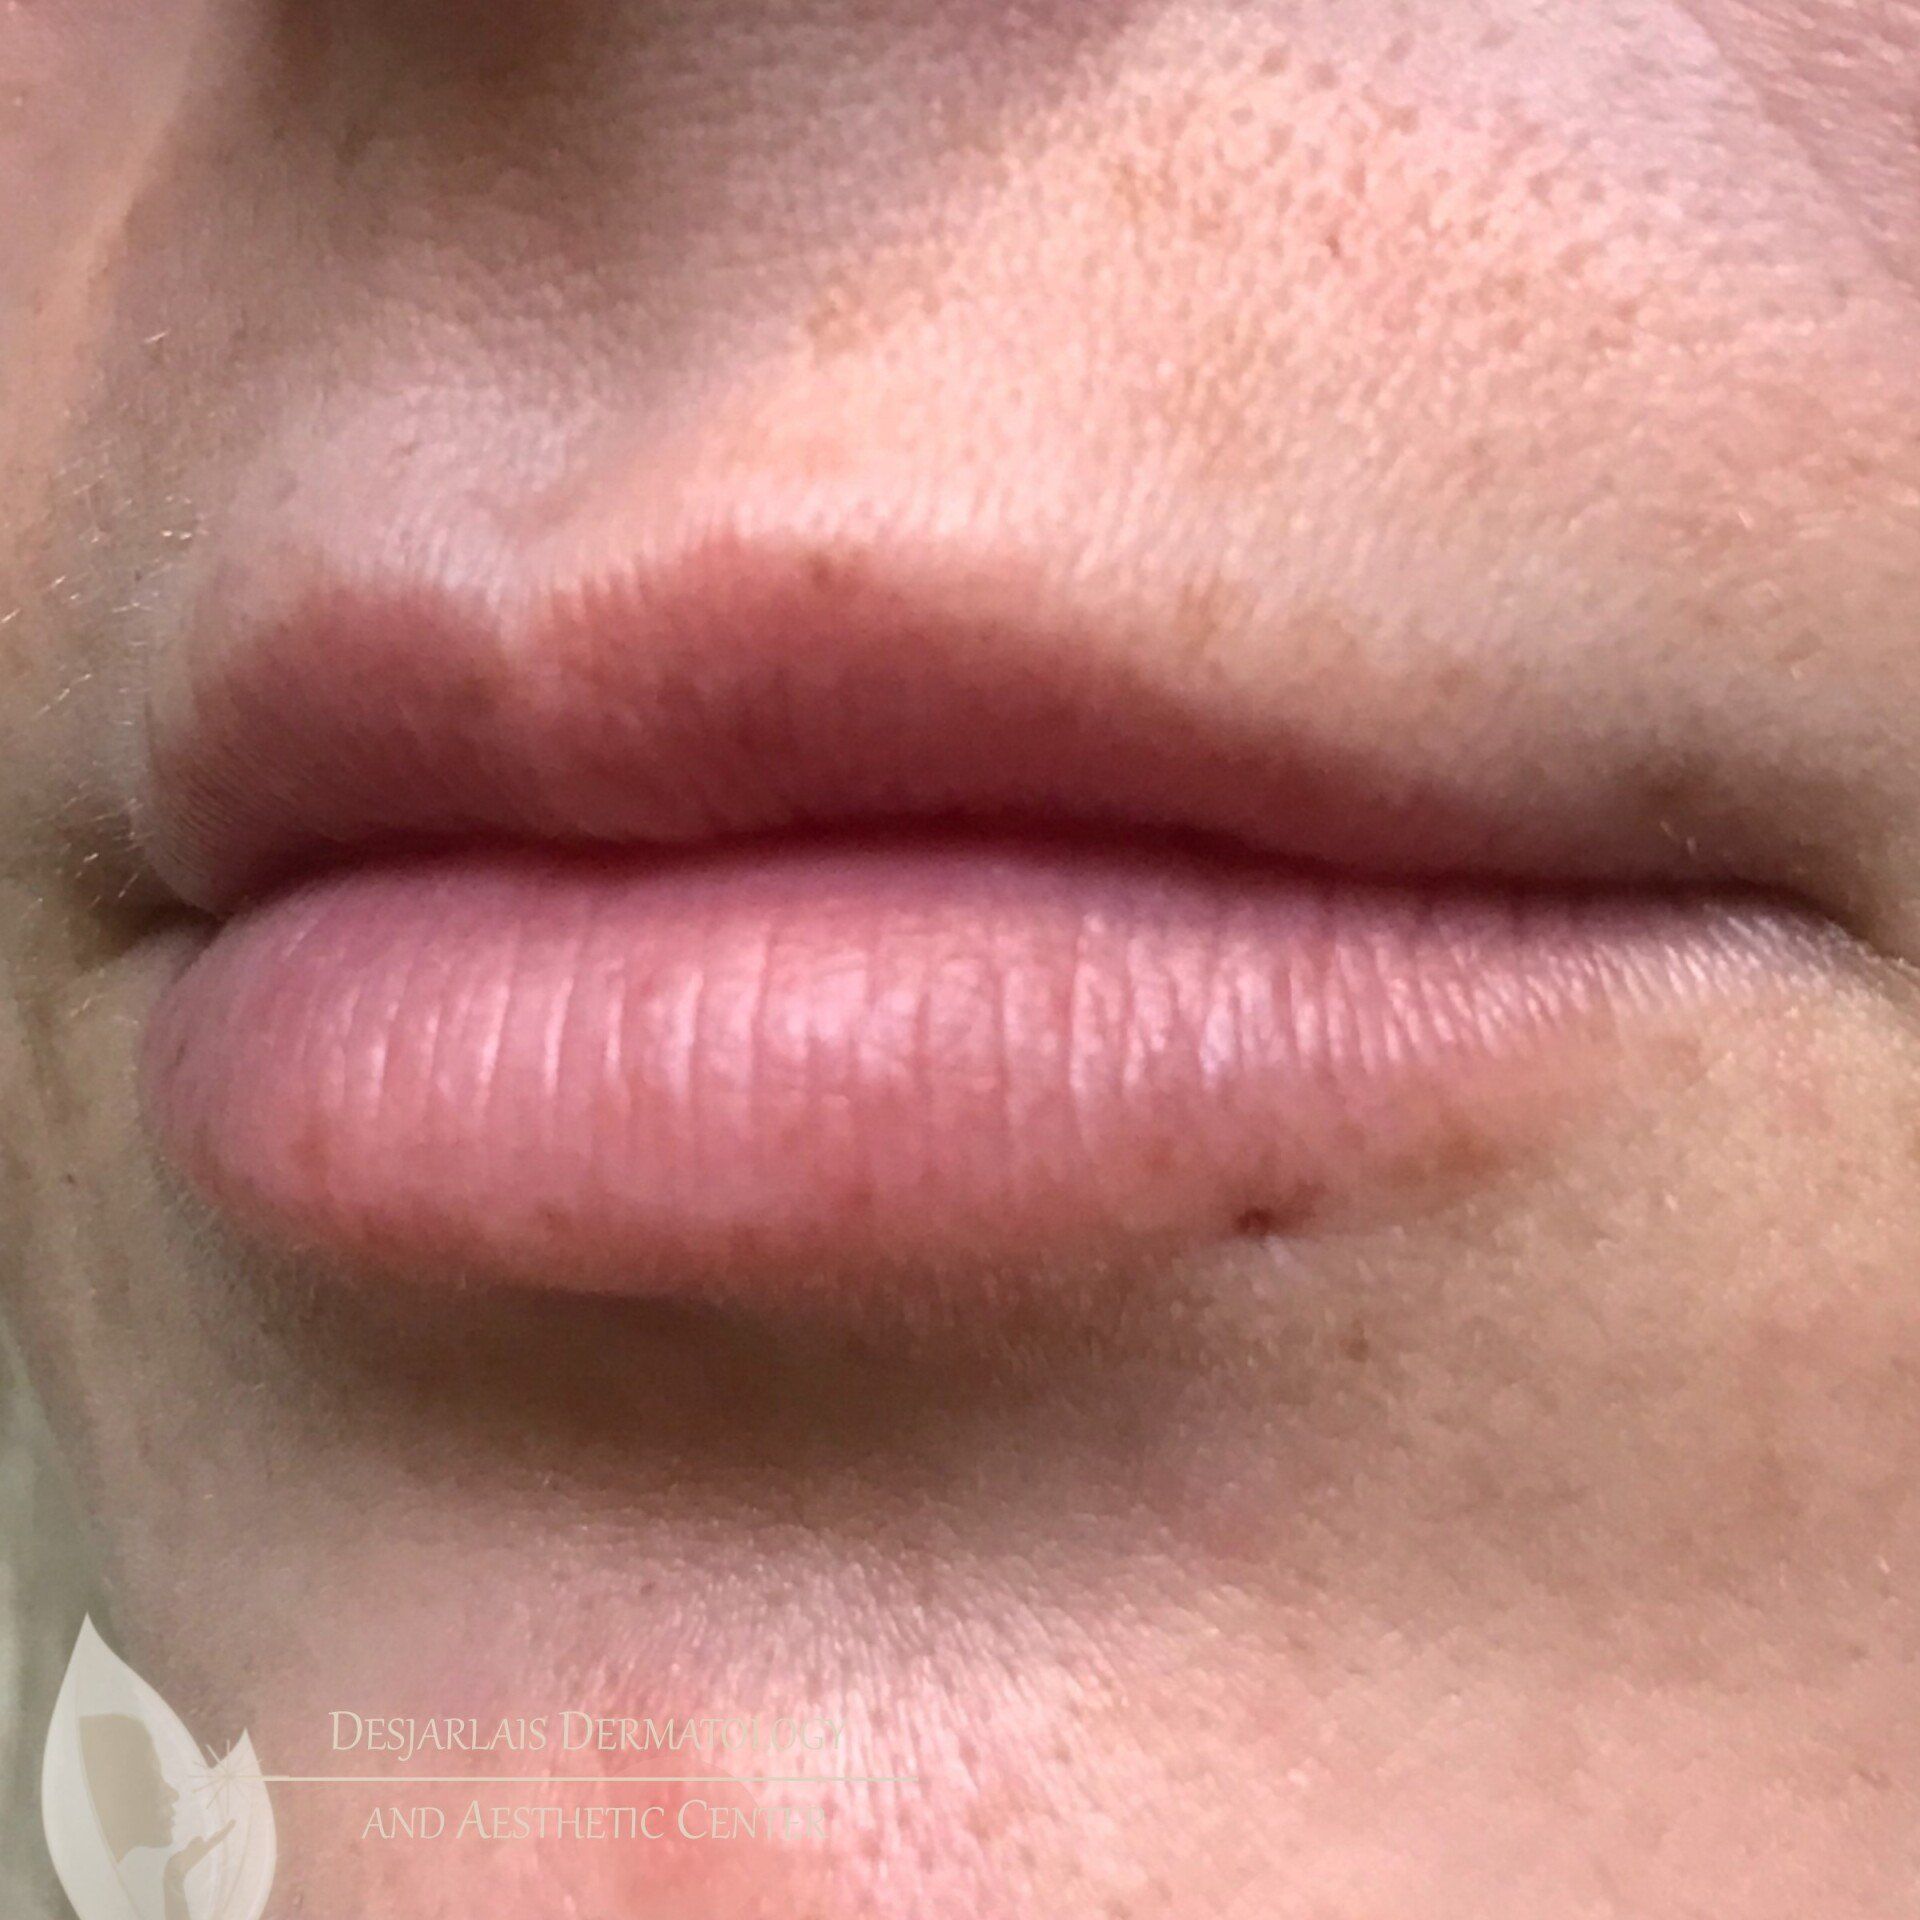 Lip Filler Before Image at Dr. Desjarlais' Office in Adrian, MI